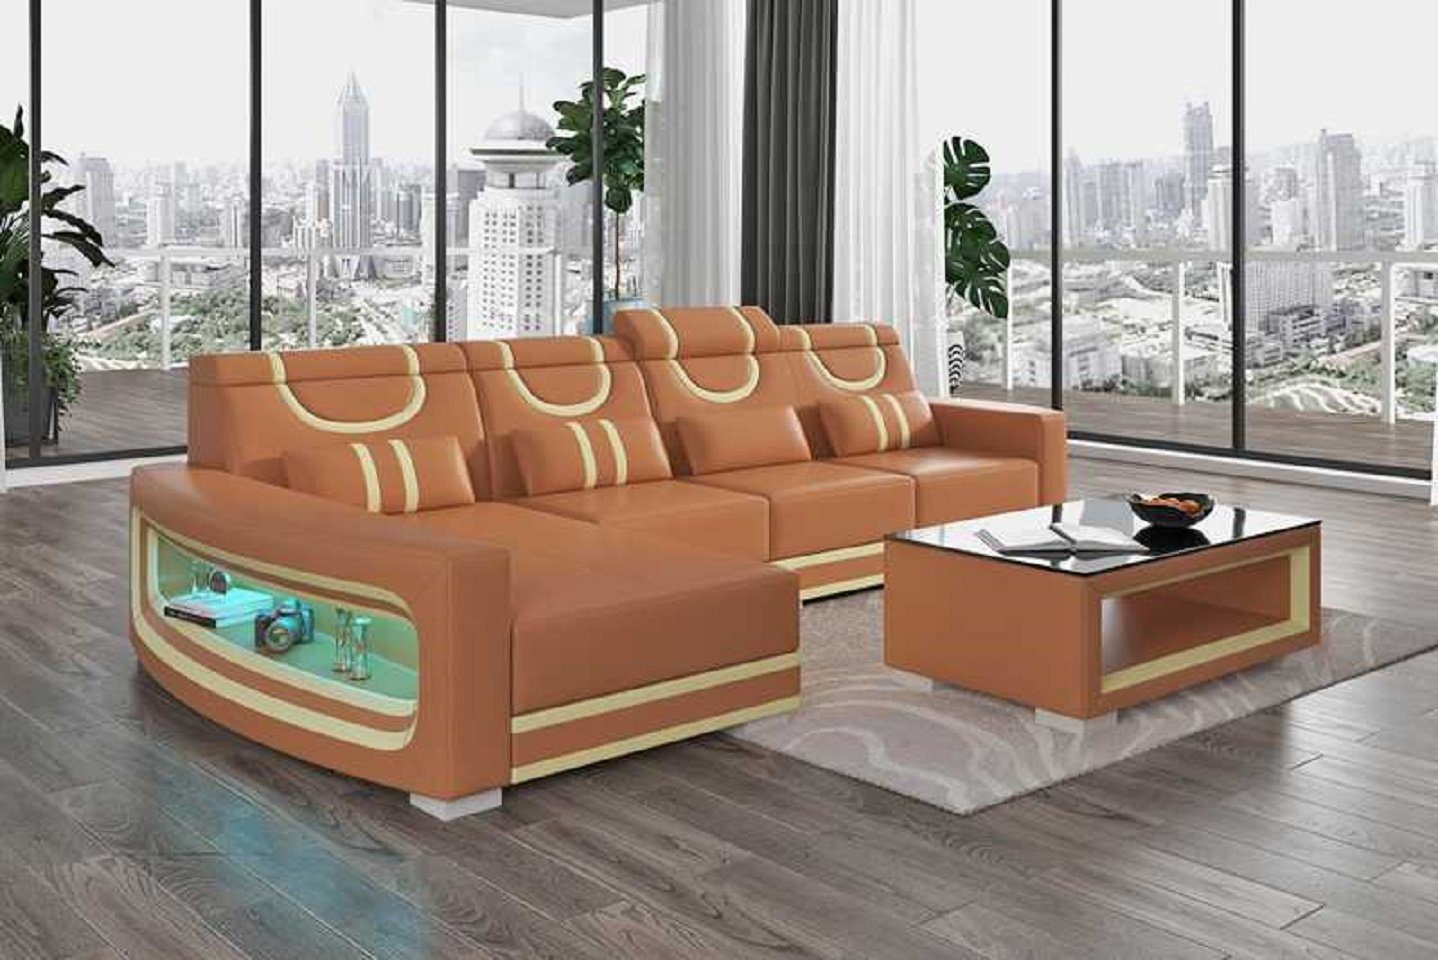 JVmoebel Ecksofa Luxus Ecksofa Braun Ledersofa Couchen, in Orange Form Liege Teile, Made 3 Modern Europe Sofas Sofa L